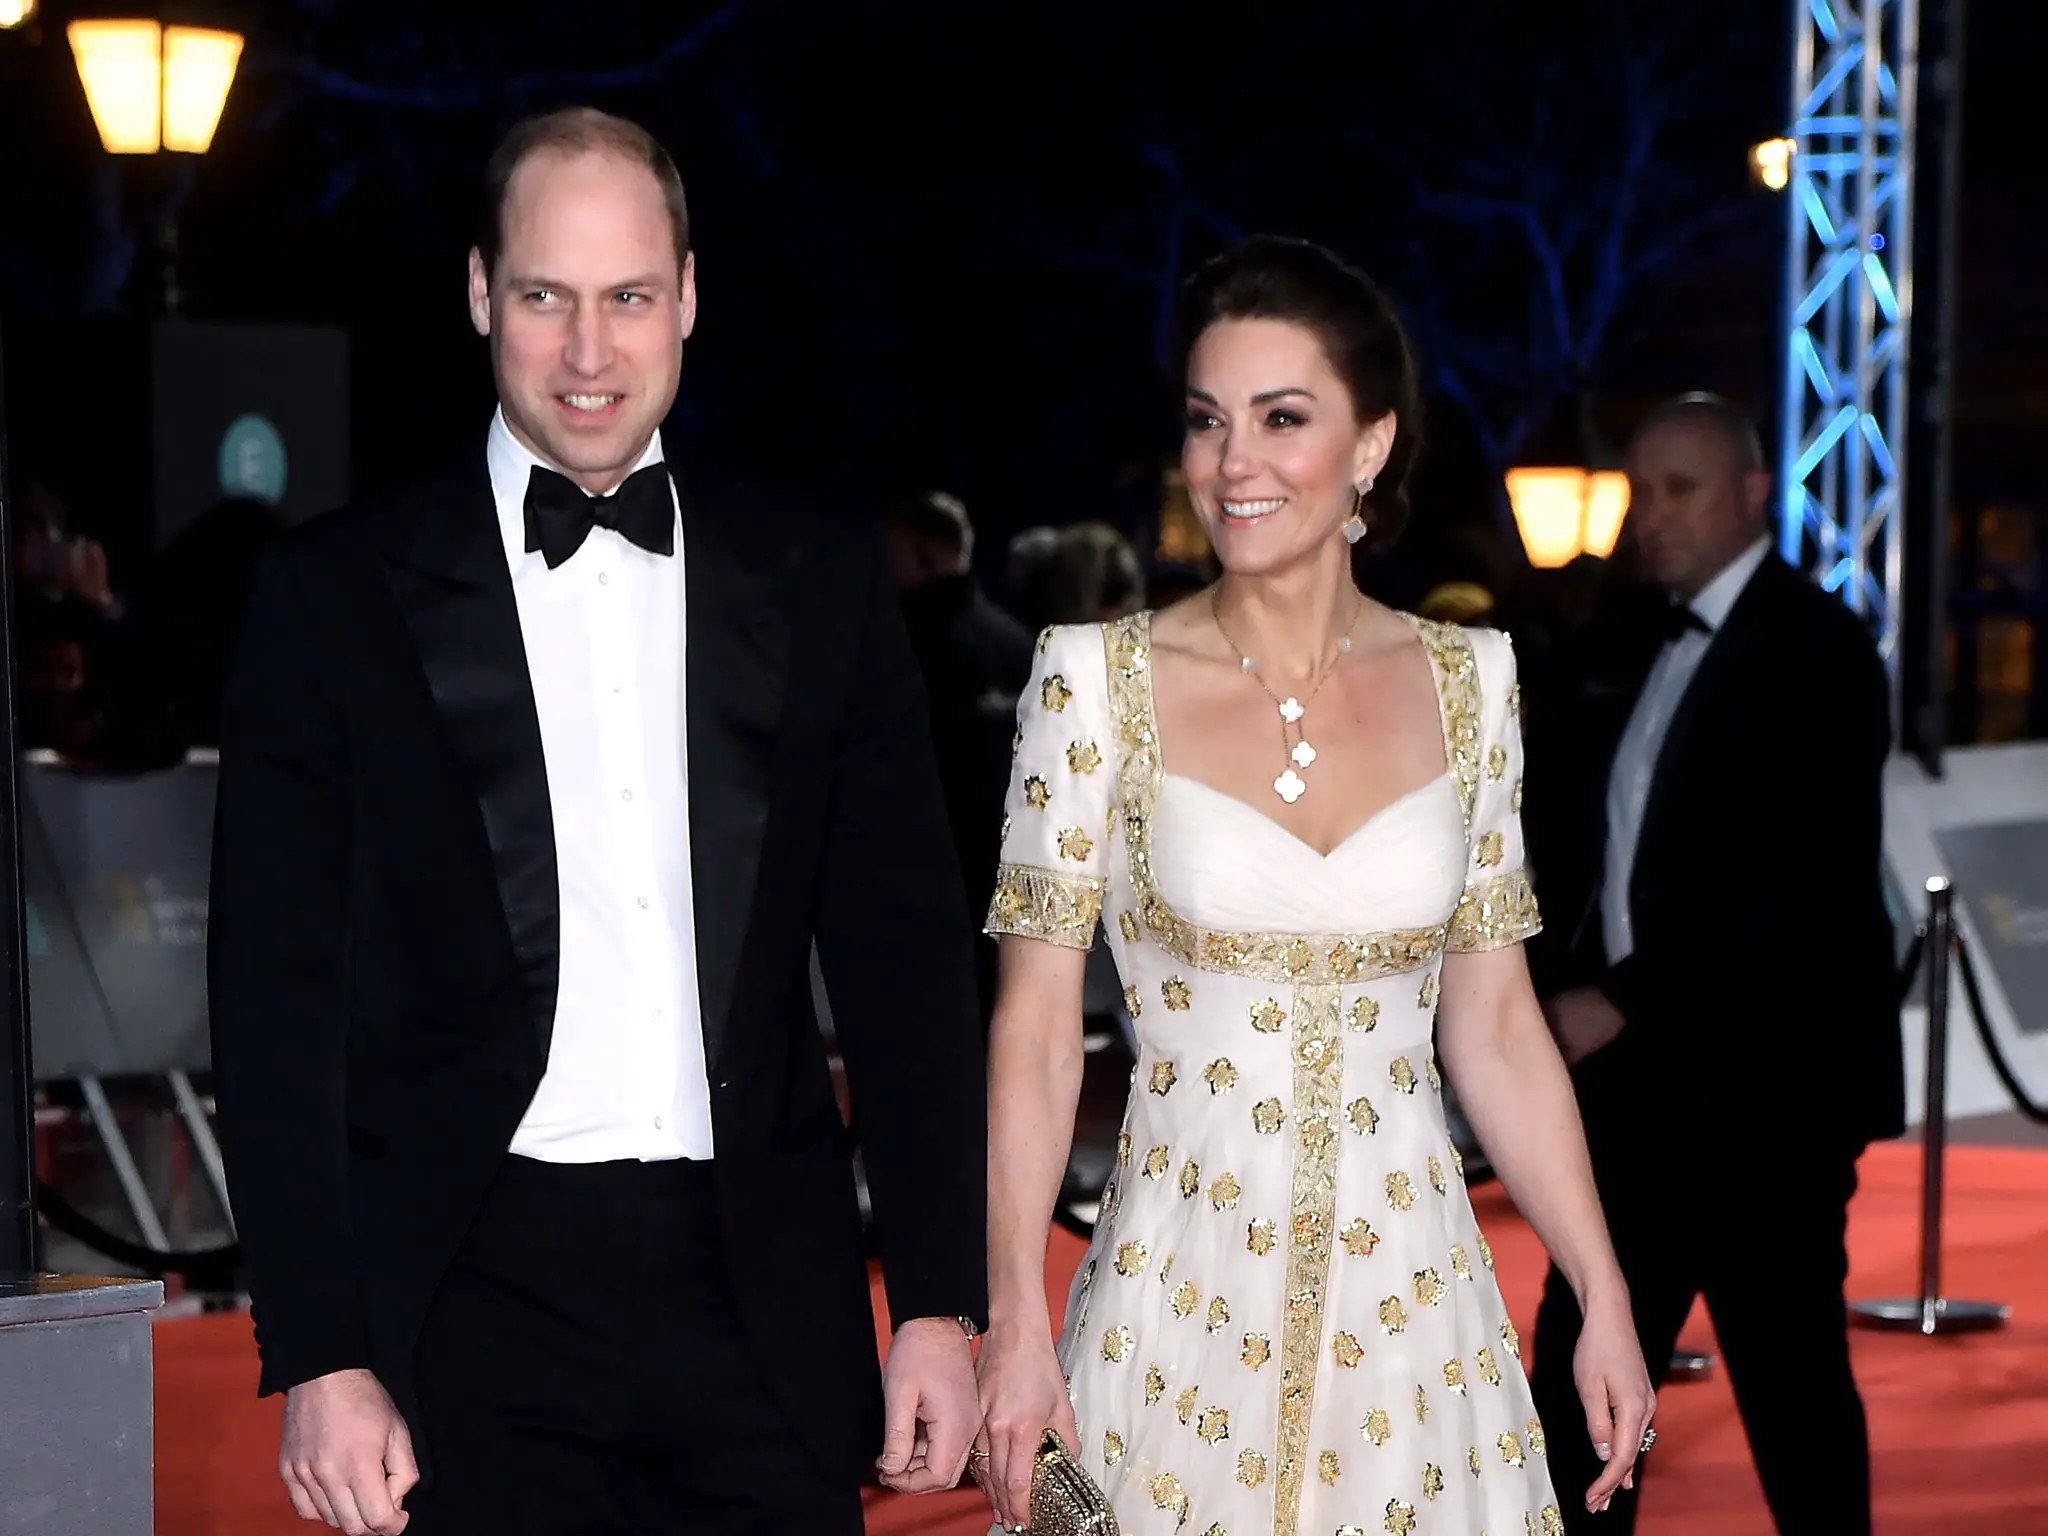 The Duke and Duchess of Cambridge at BAFTA 2020